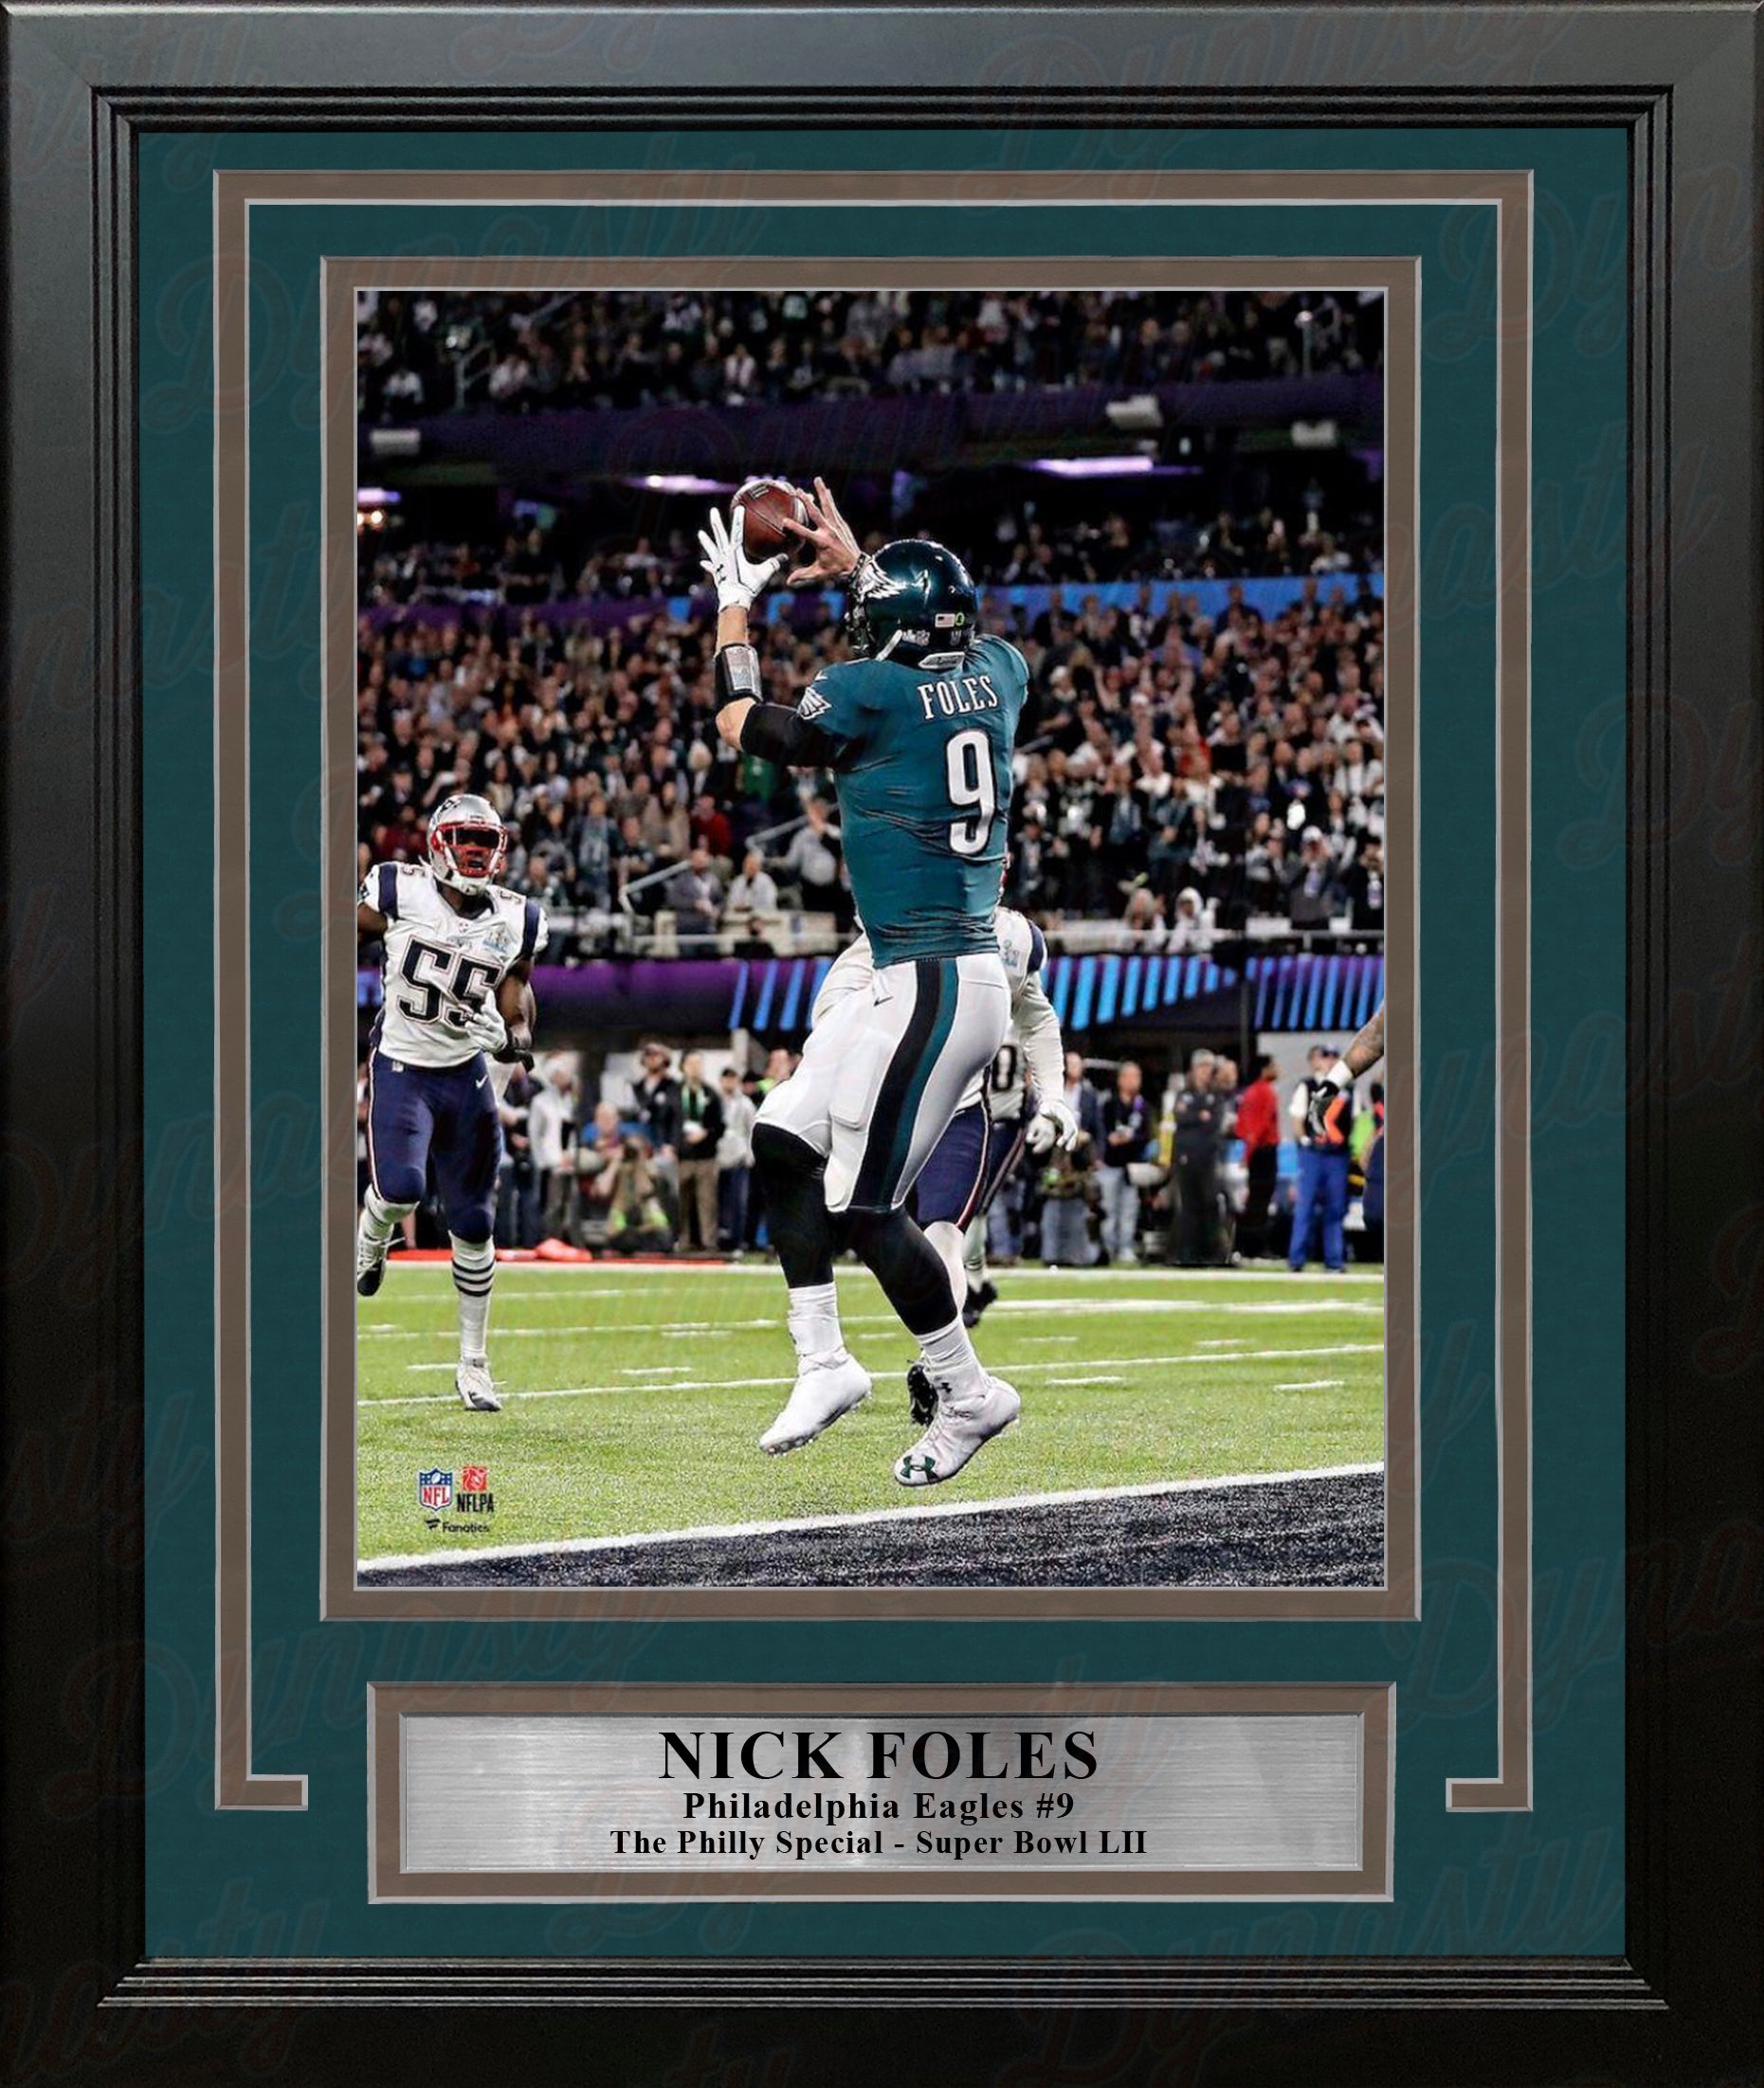 Nick Foles Philadelphia Eagles Super Bowl LII Philly Special TD Catch 8x10 Framed Football Photo - Dynasty Sports & Framing 